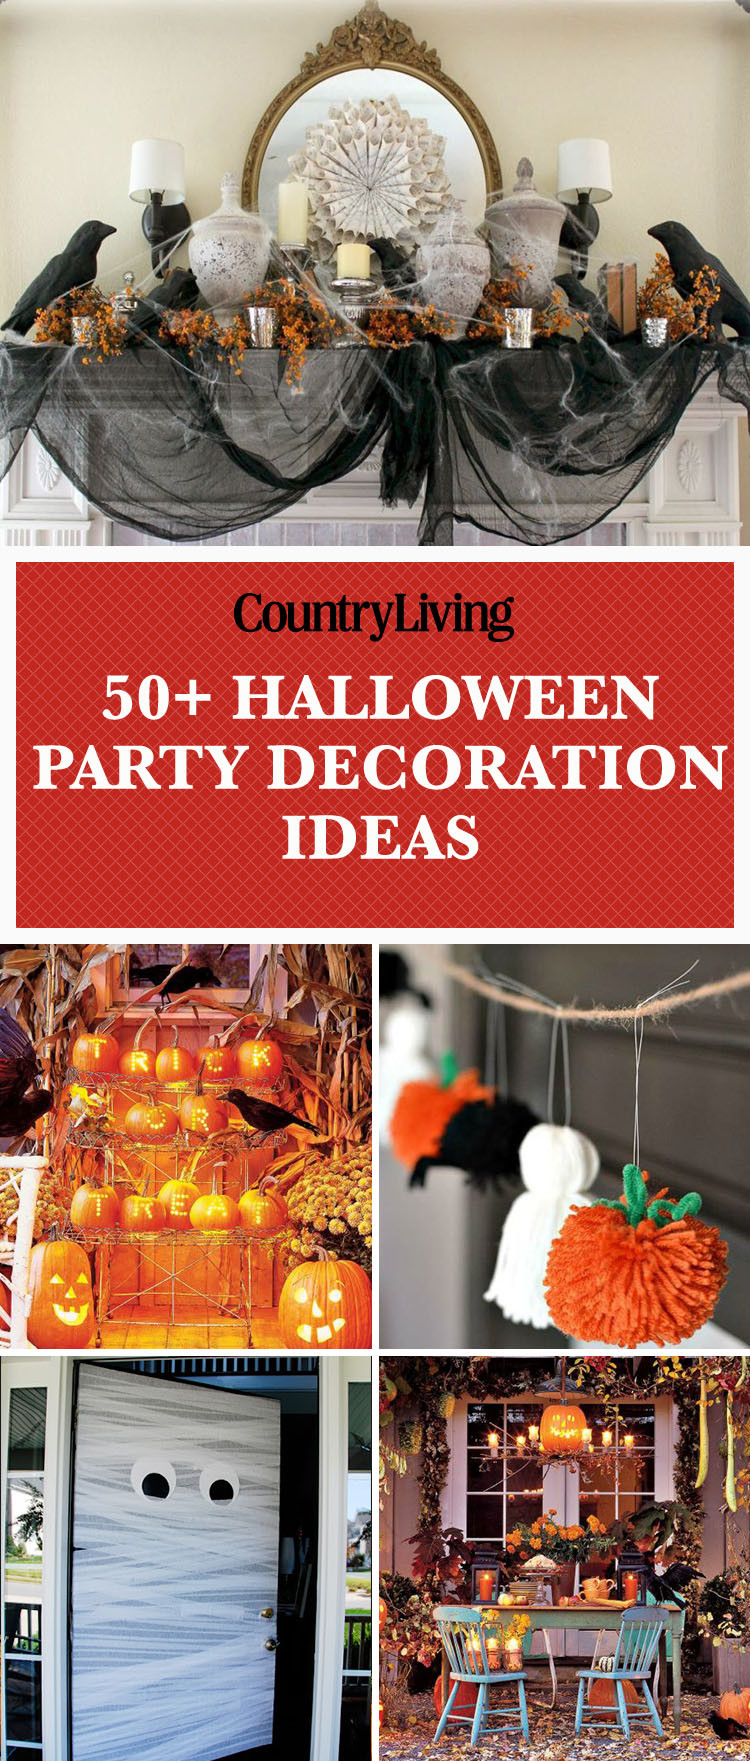 Halloween Party Decorations Ideas
 56 Fun Halloween Party Decorating Ideas Spooky Halloween